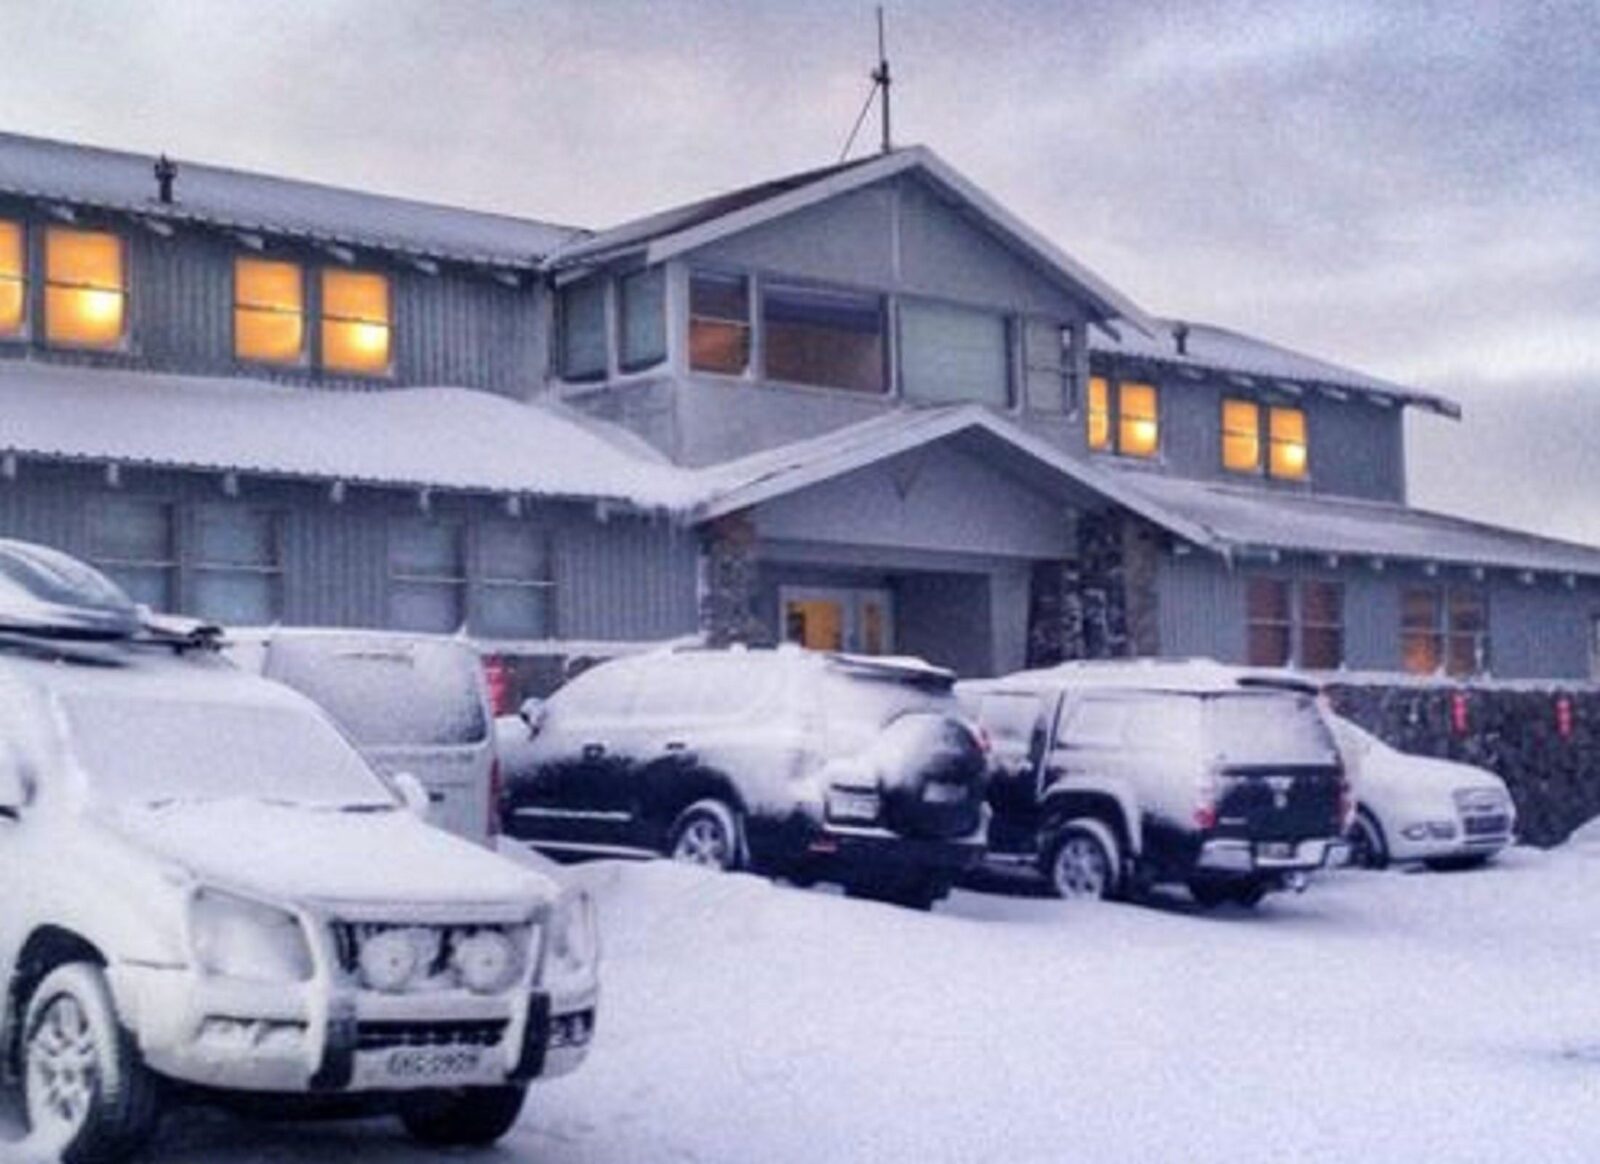 Lodge 21 Snowy lights